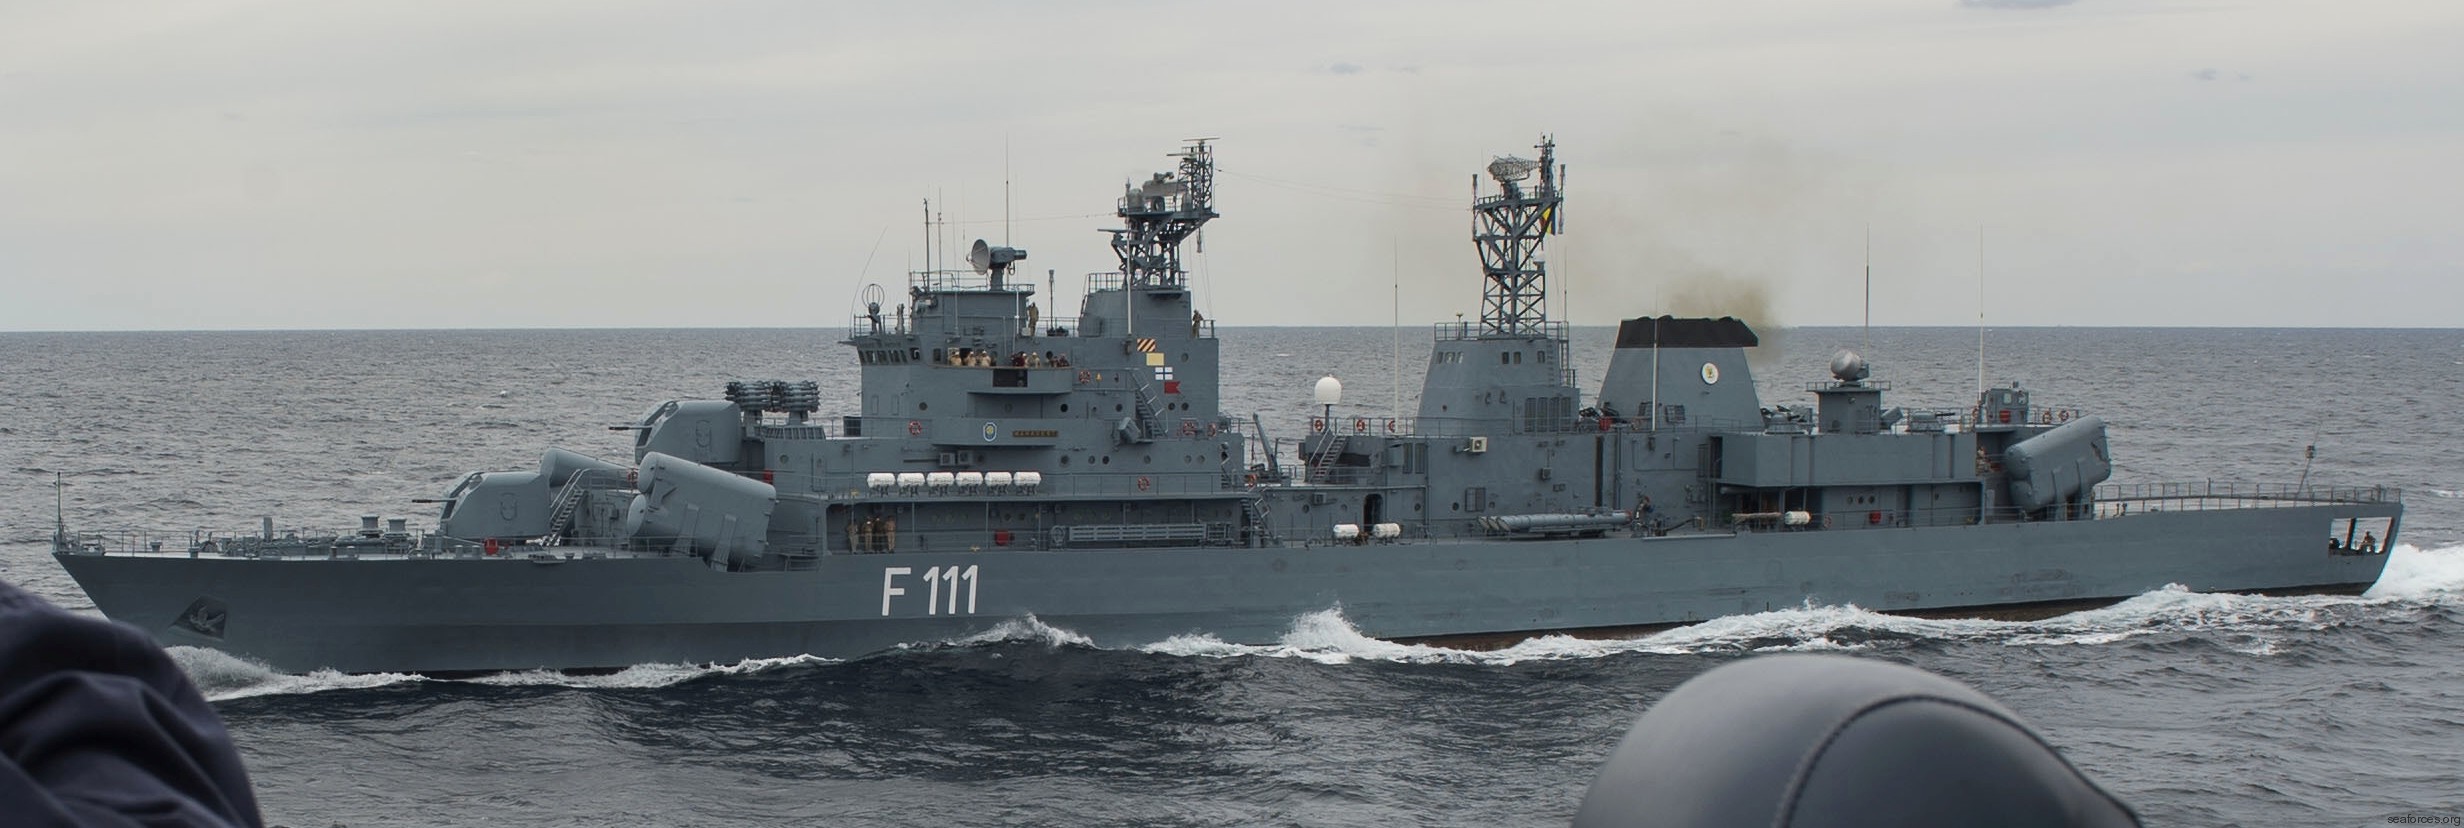 f-111 ros marasesti frigate romanian navy 11 nato snmg